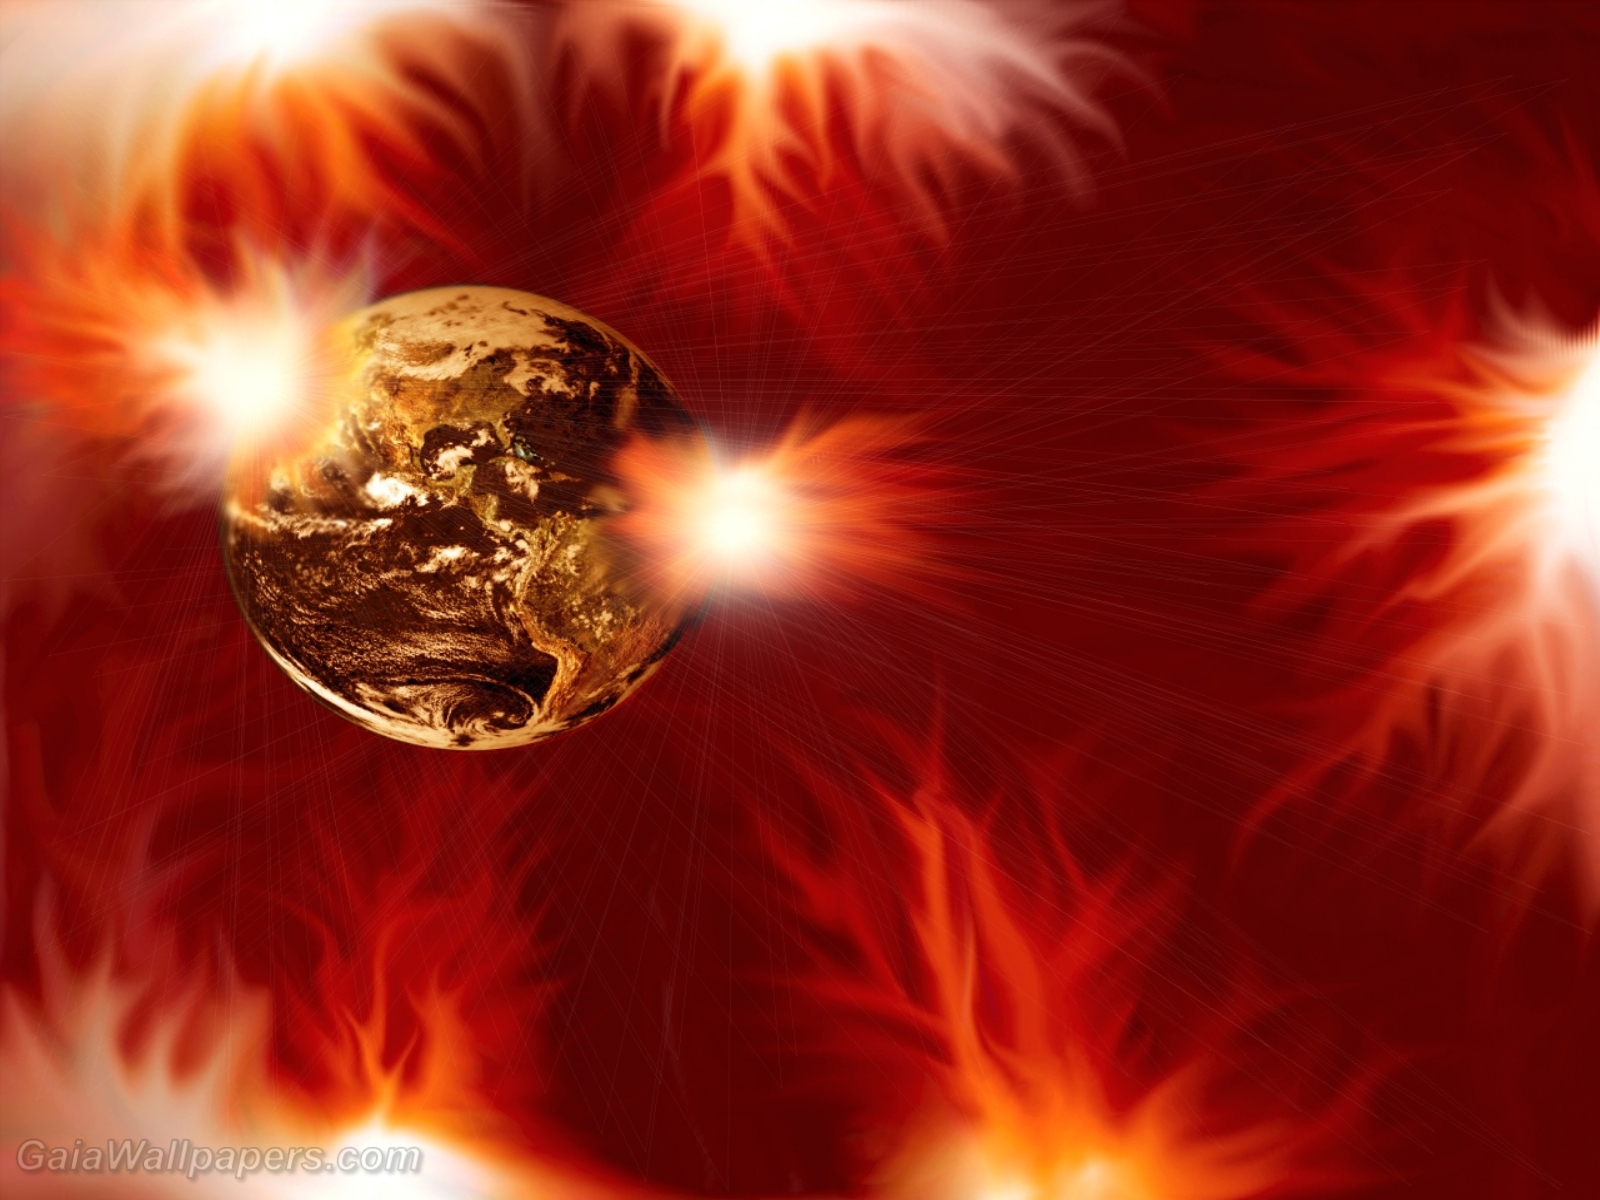 Lost earth in a fire universe - Free desktop wallpapers